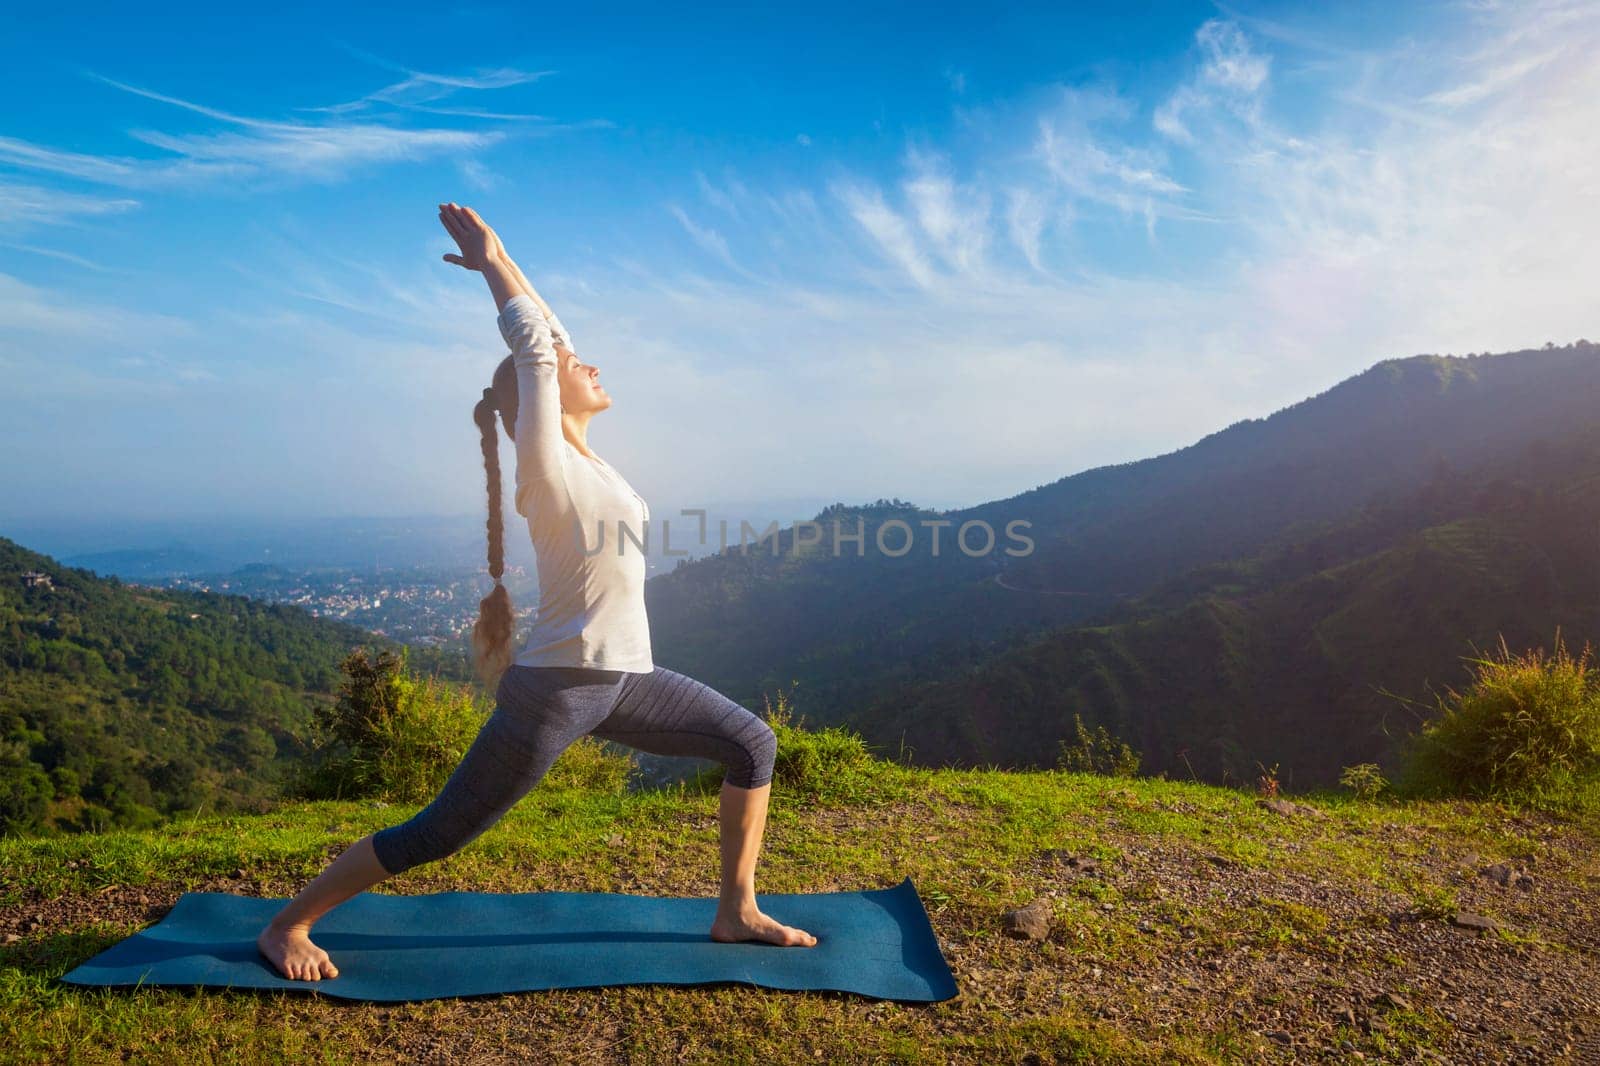 Yoga outdoors - woman doing yoga asana Virabhadrasana 1 - Warrior pose posture outdoors in Himalayas mountains in the morning